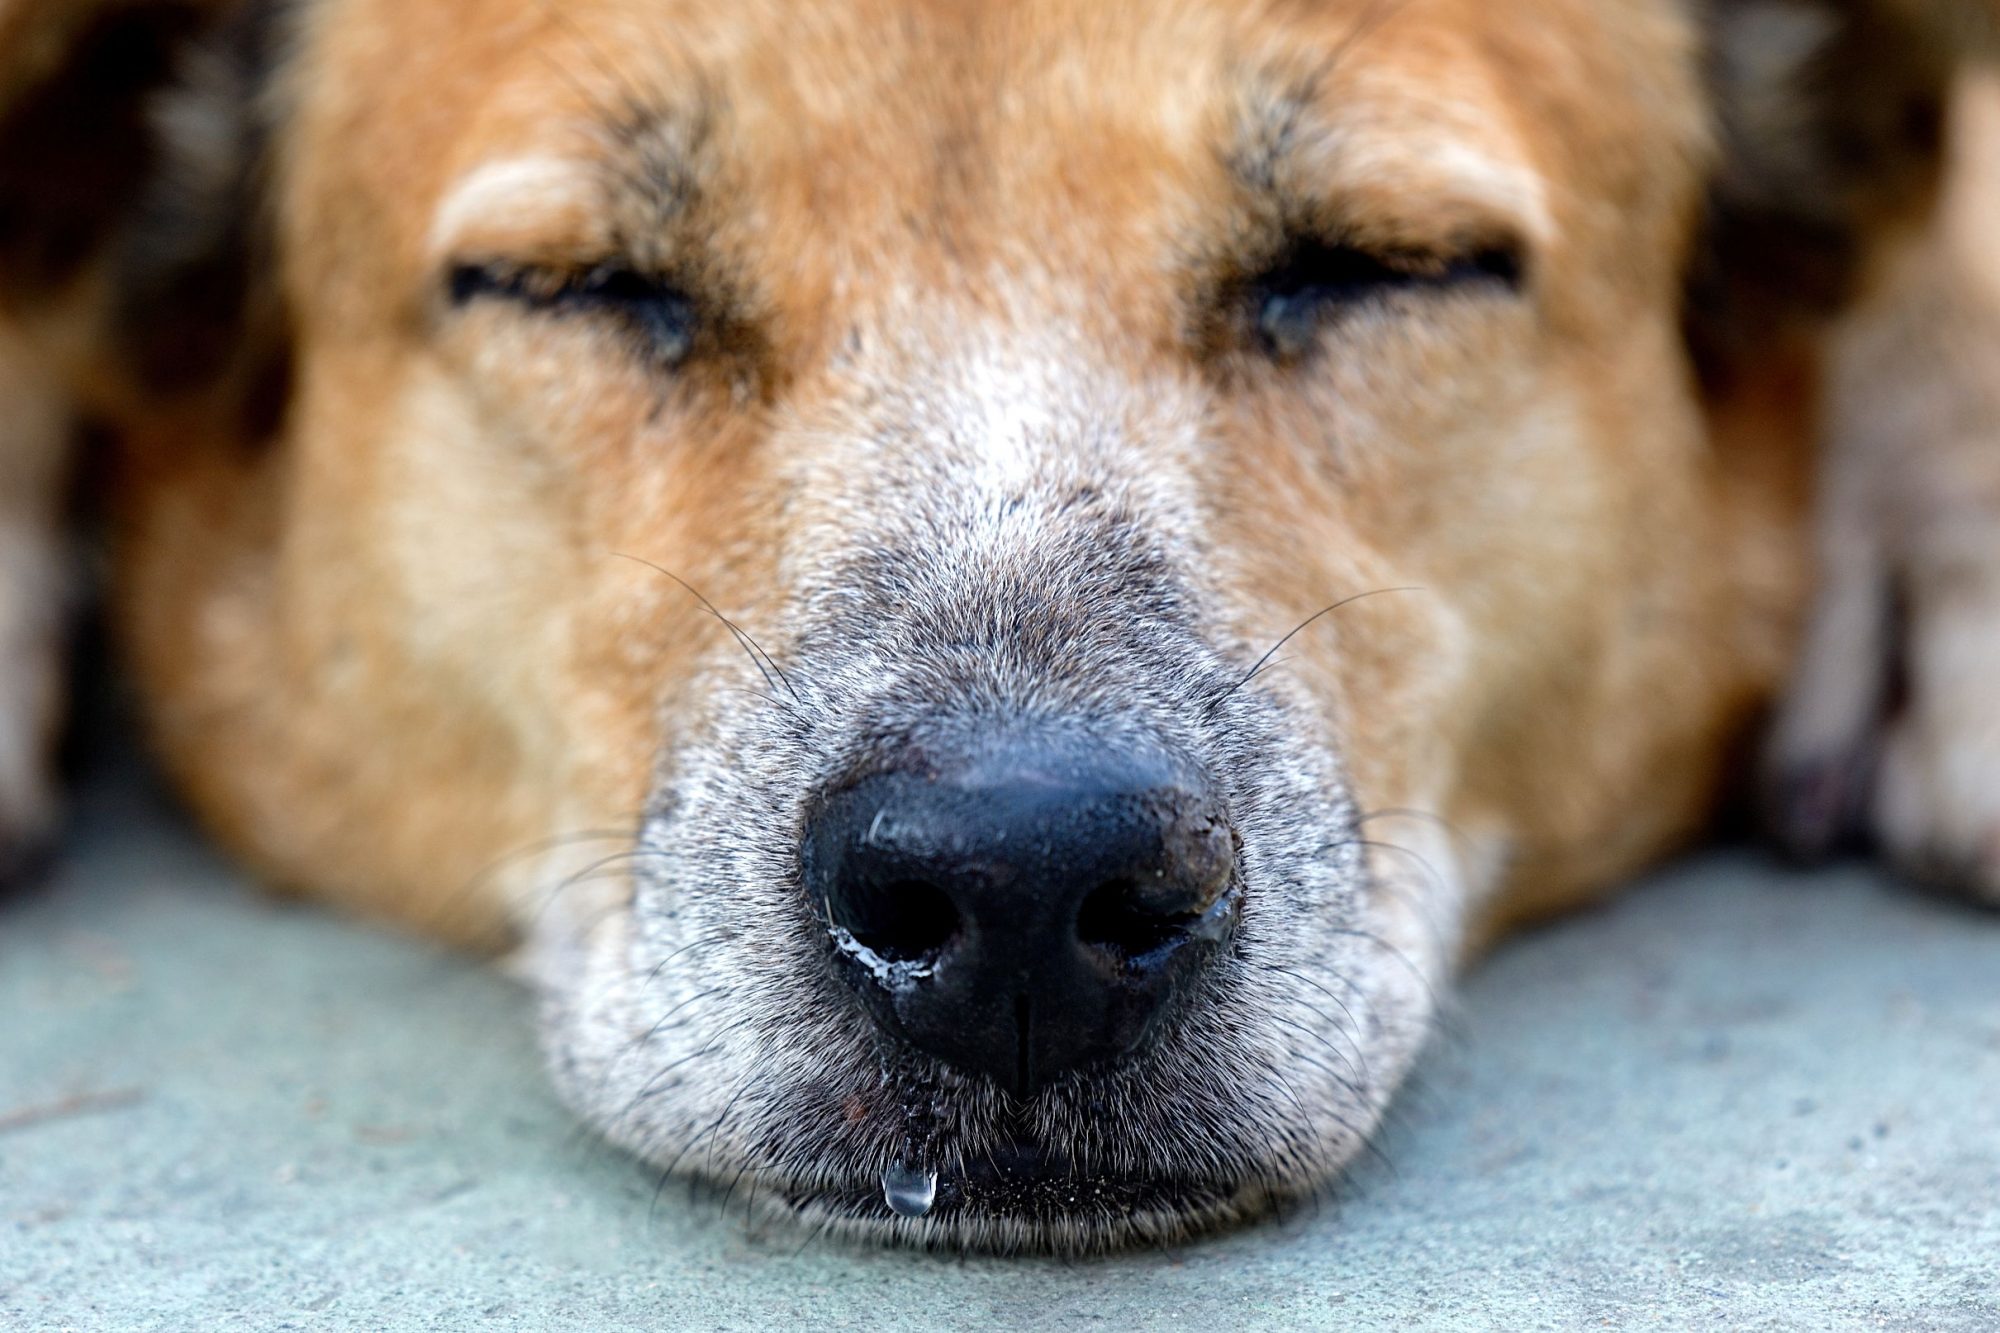 A close-up of a sleeping dog.